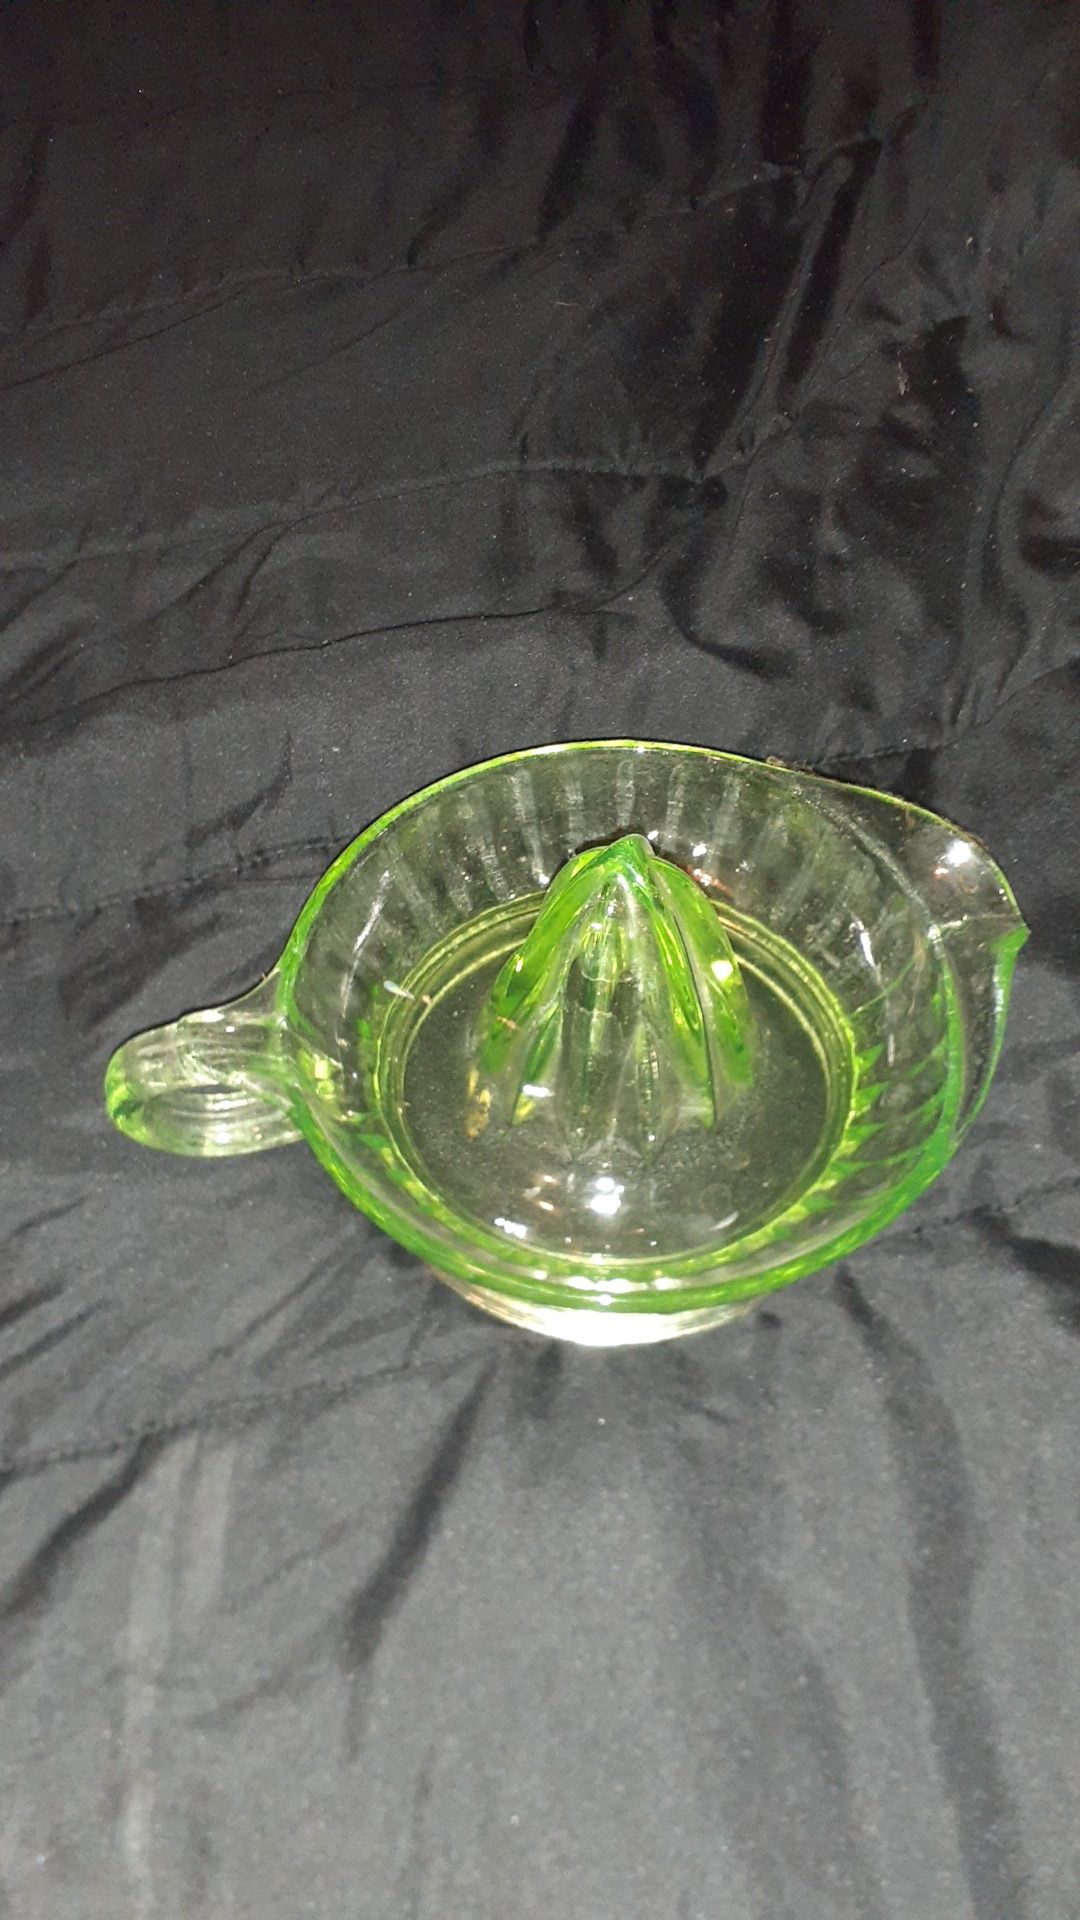 ### Antique Vaseline Glass ###